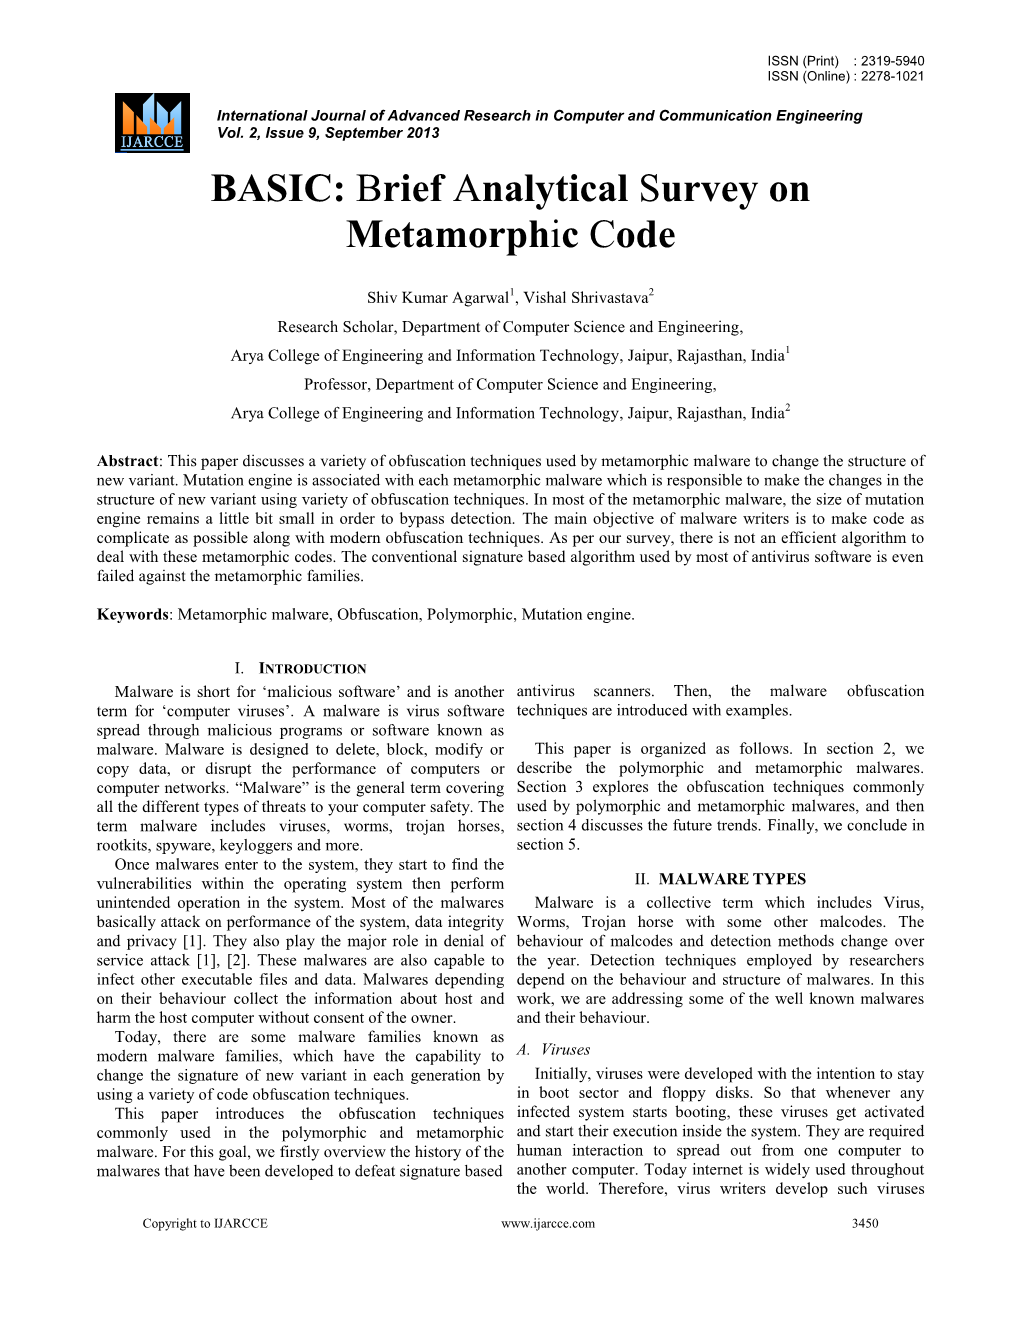 Brief Analytical Survey on Metamorphic Code